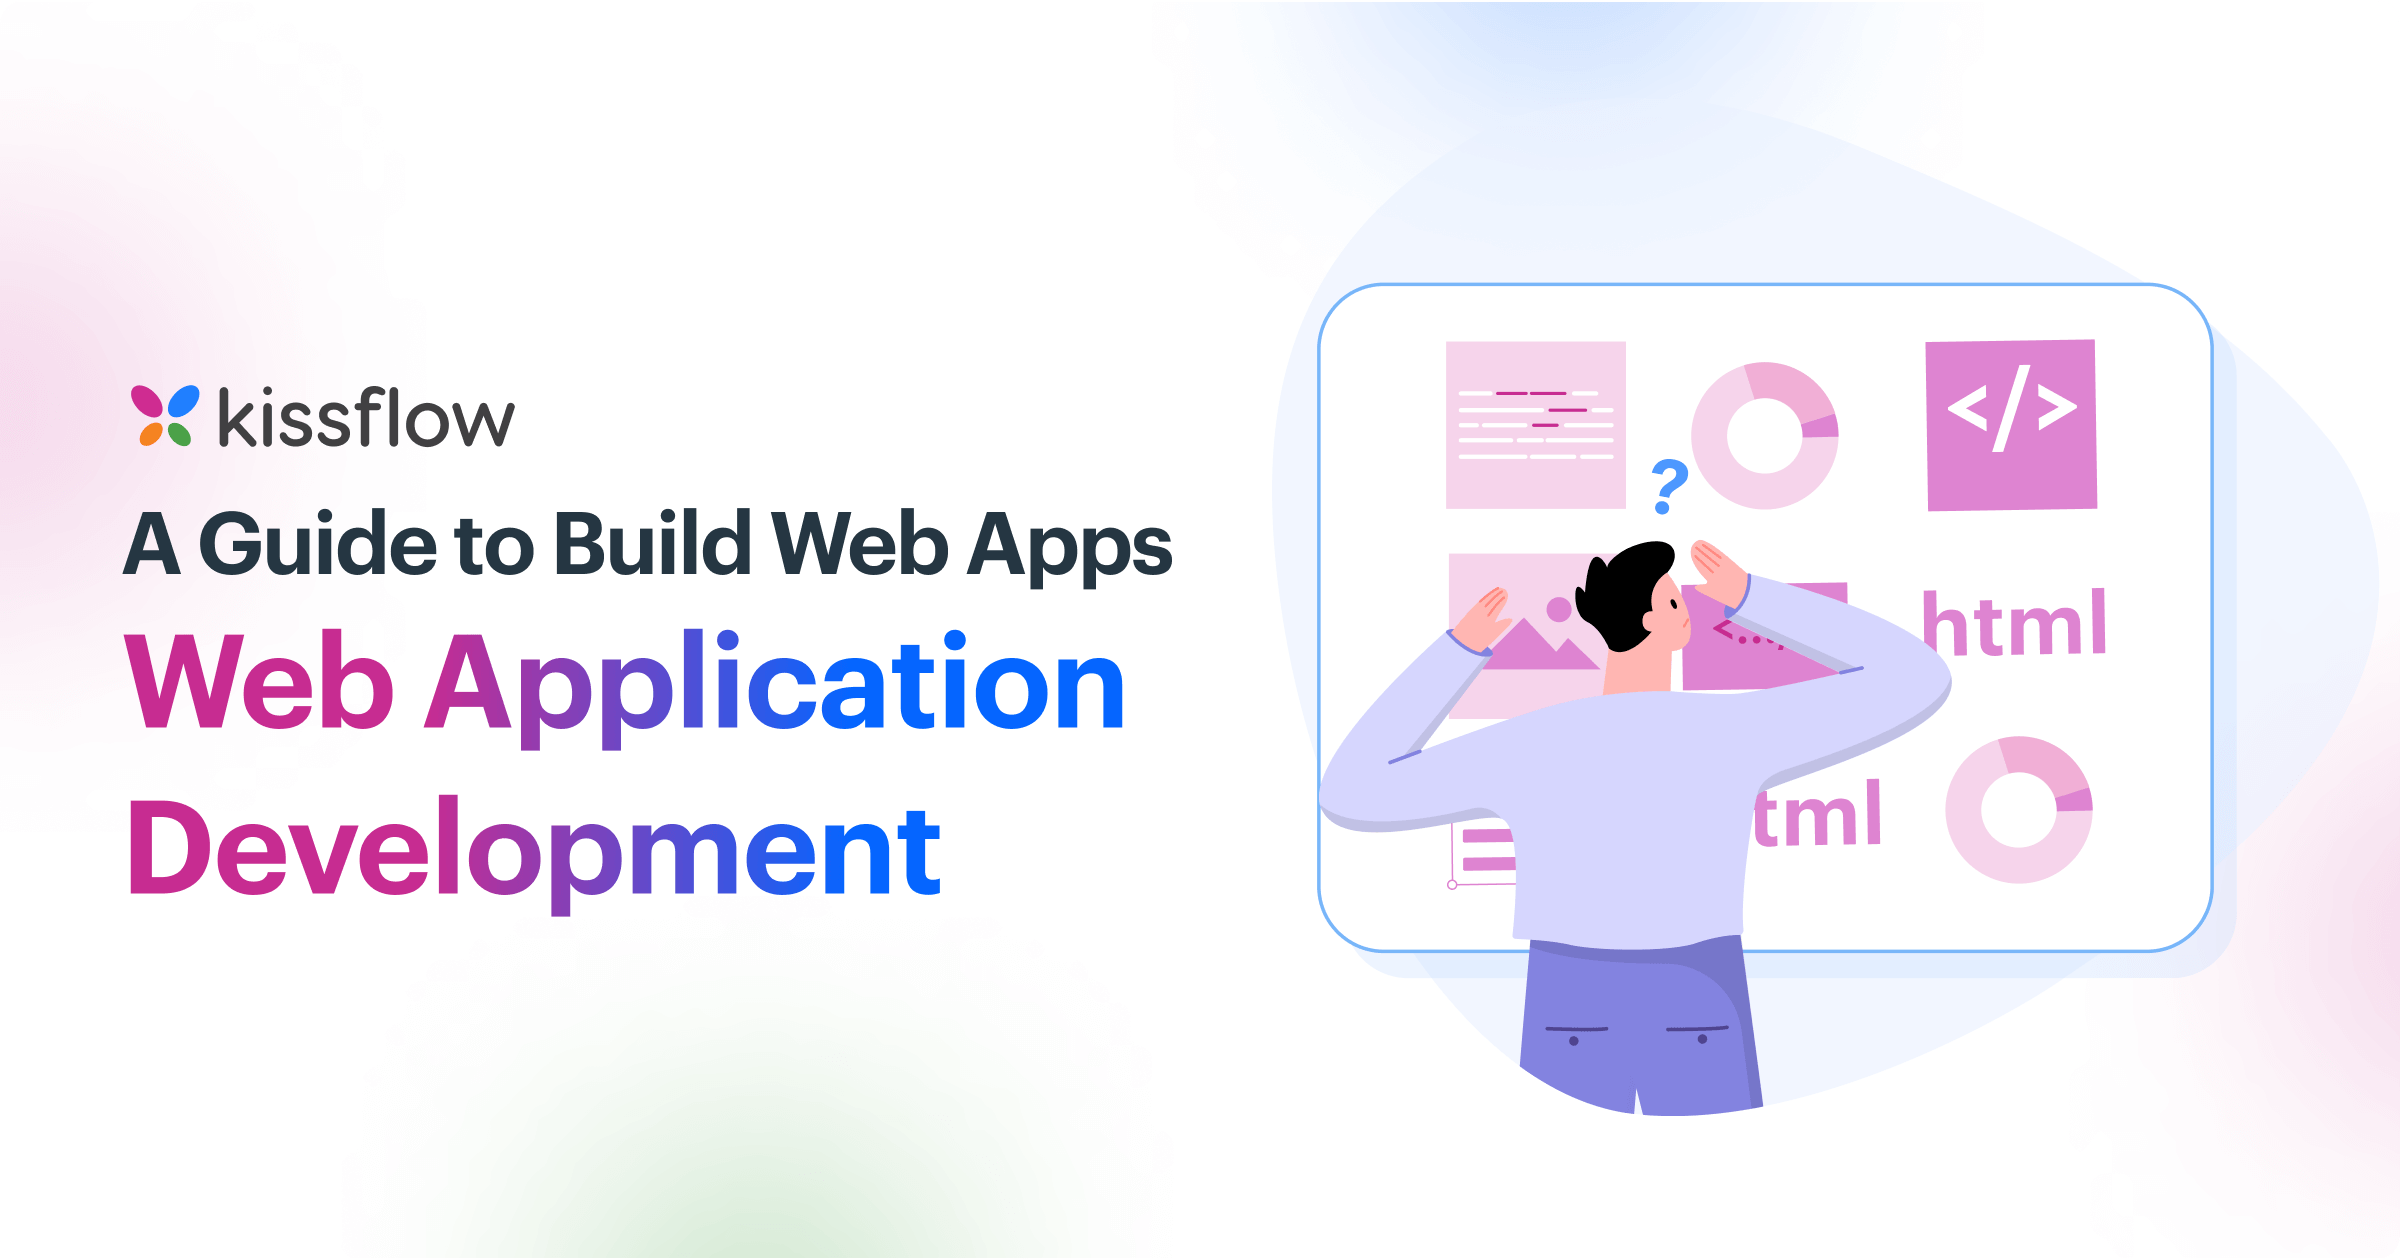 Web application development guide